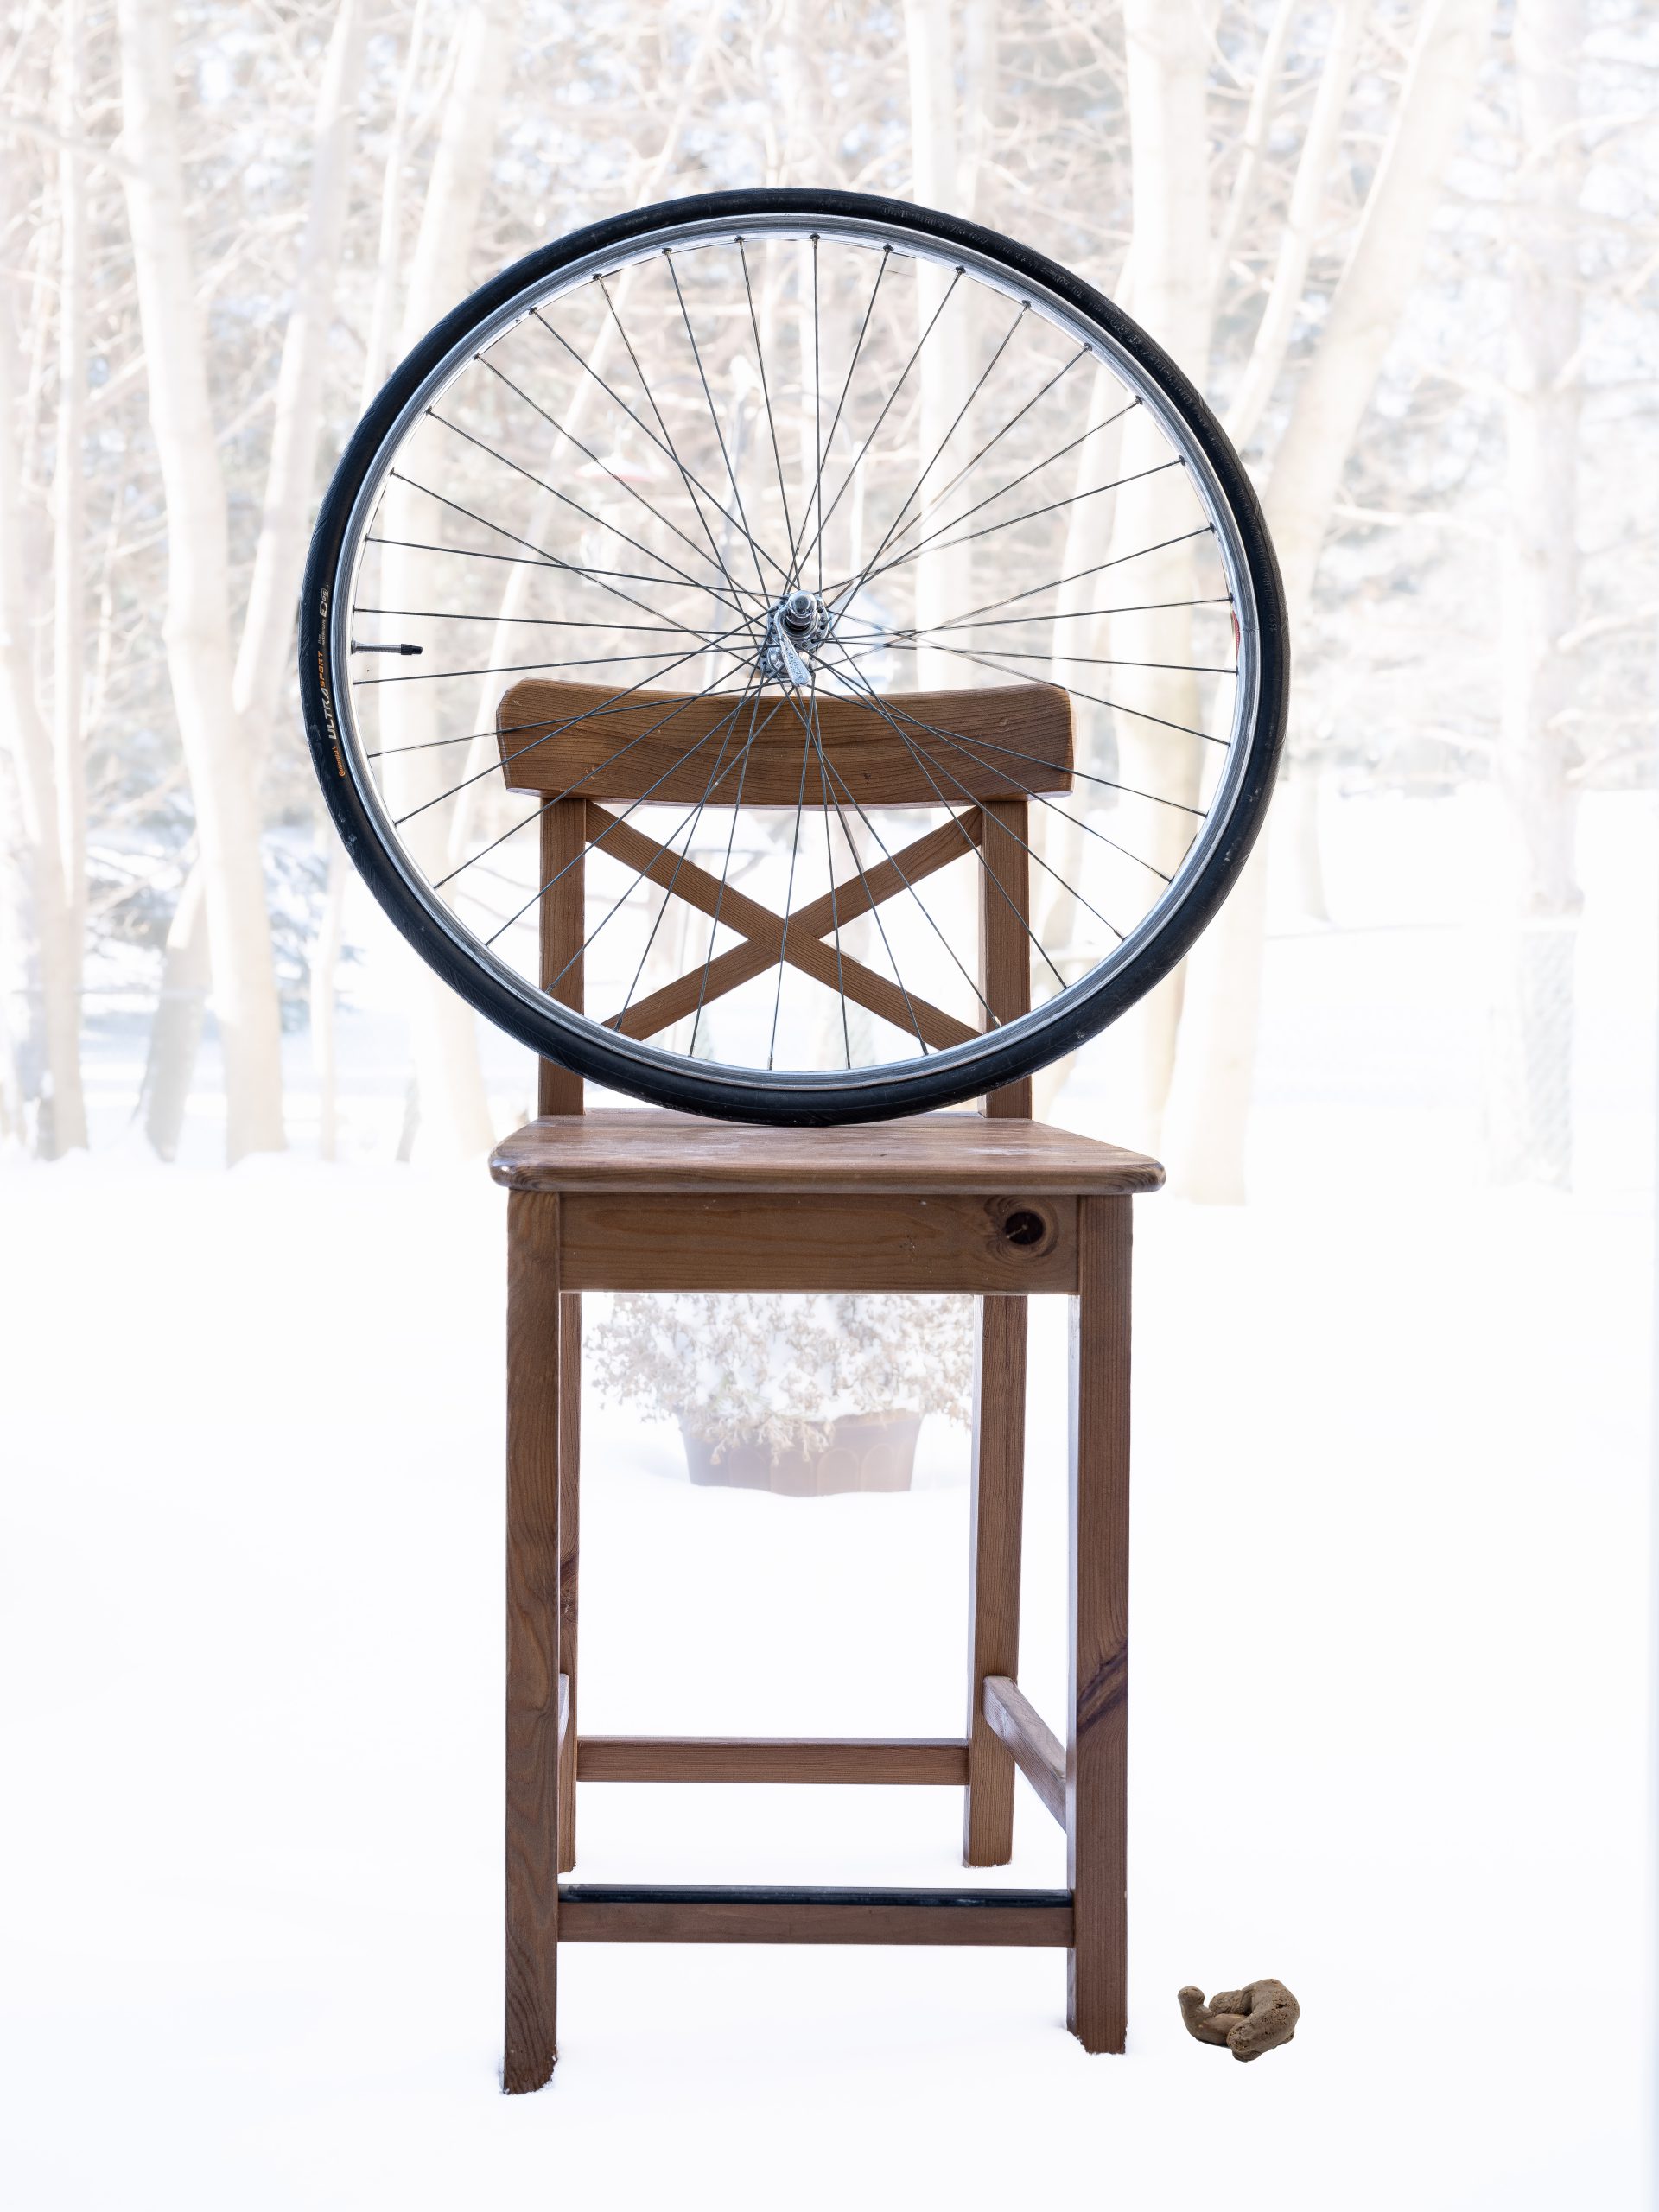 Homage to Marcel Duchamp: Bicycle Wheel